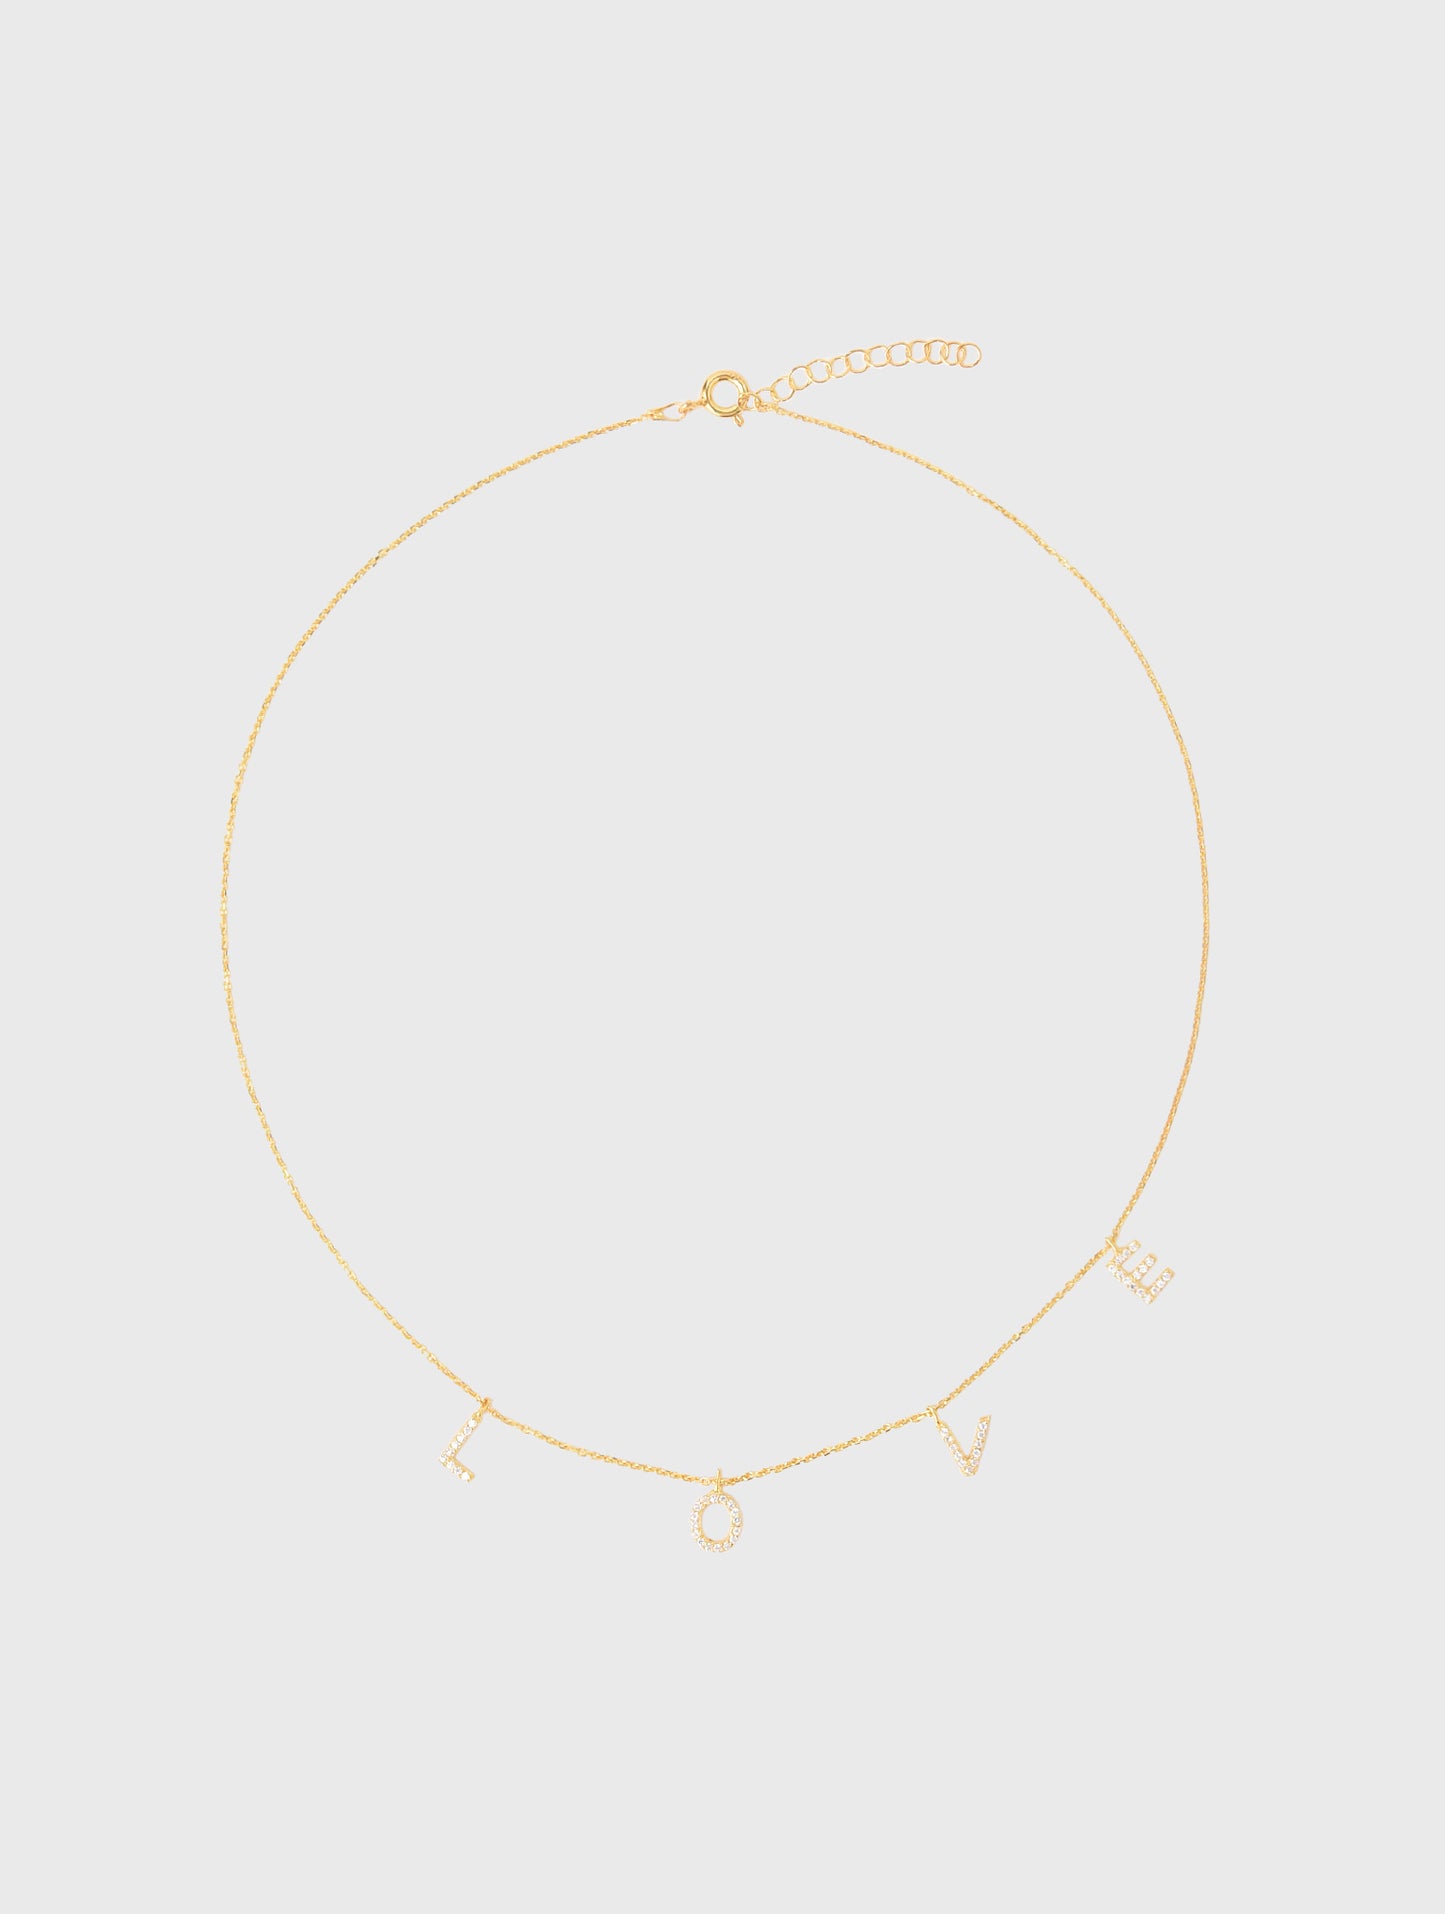 Annie O'Grady Designs Love Necklace